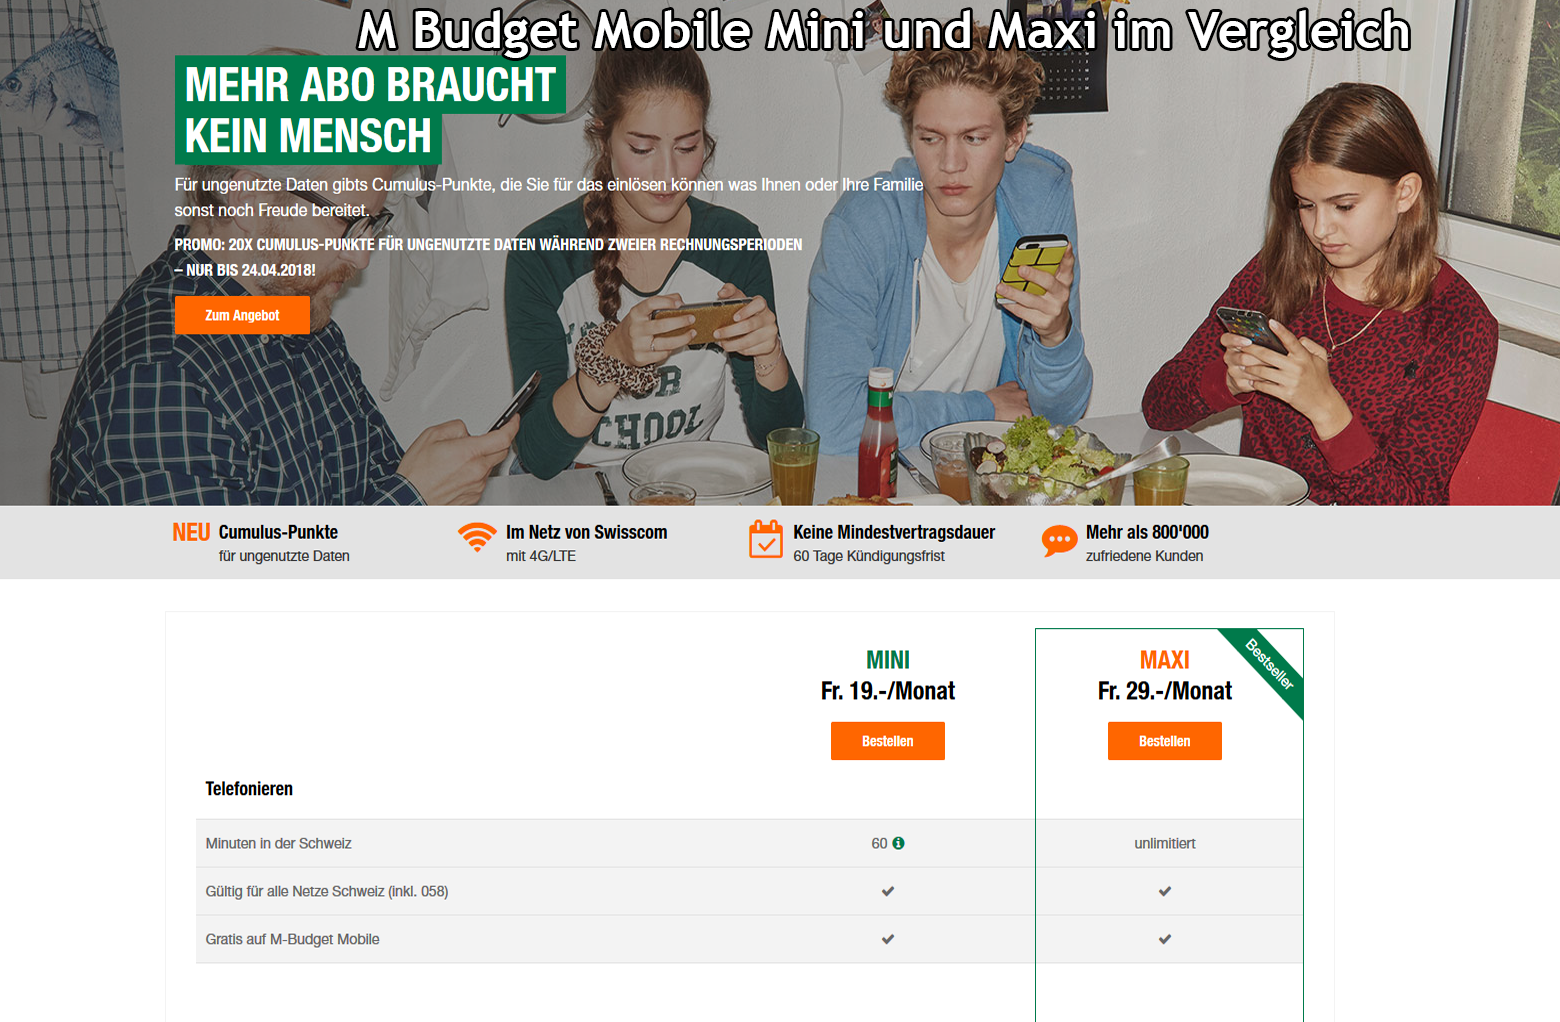 M Budget Mobile Mini und Maxi Vergleich